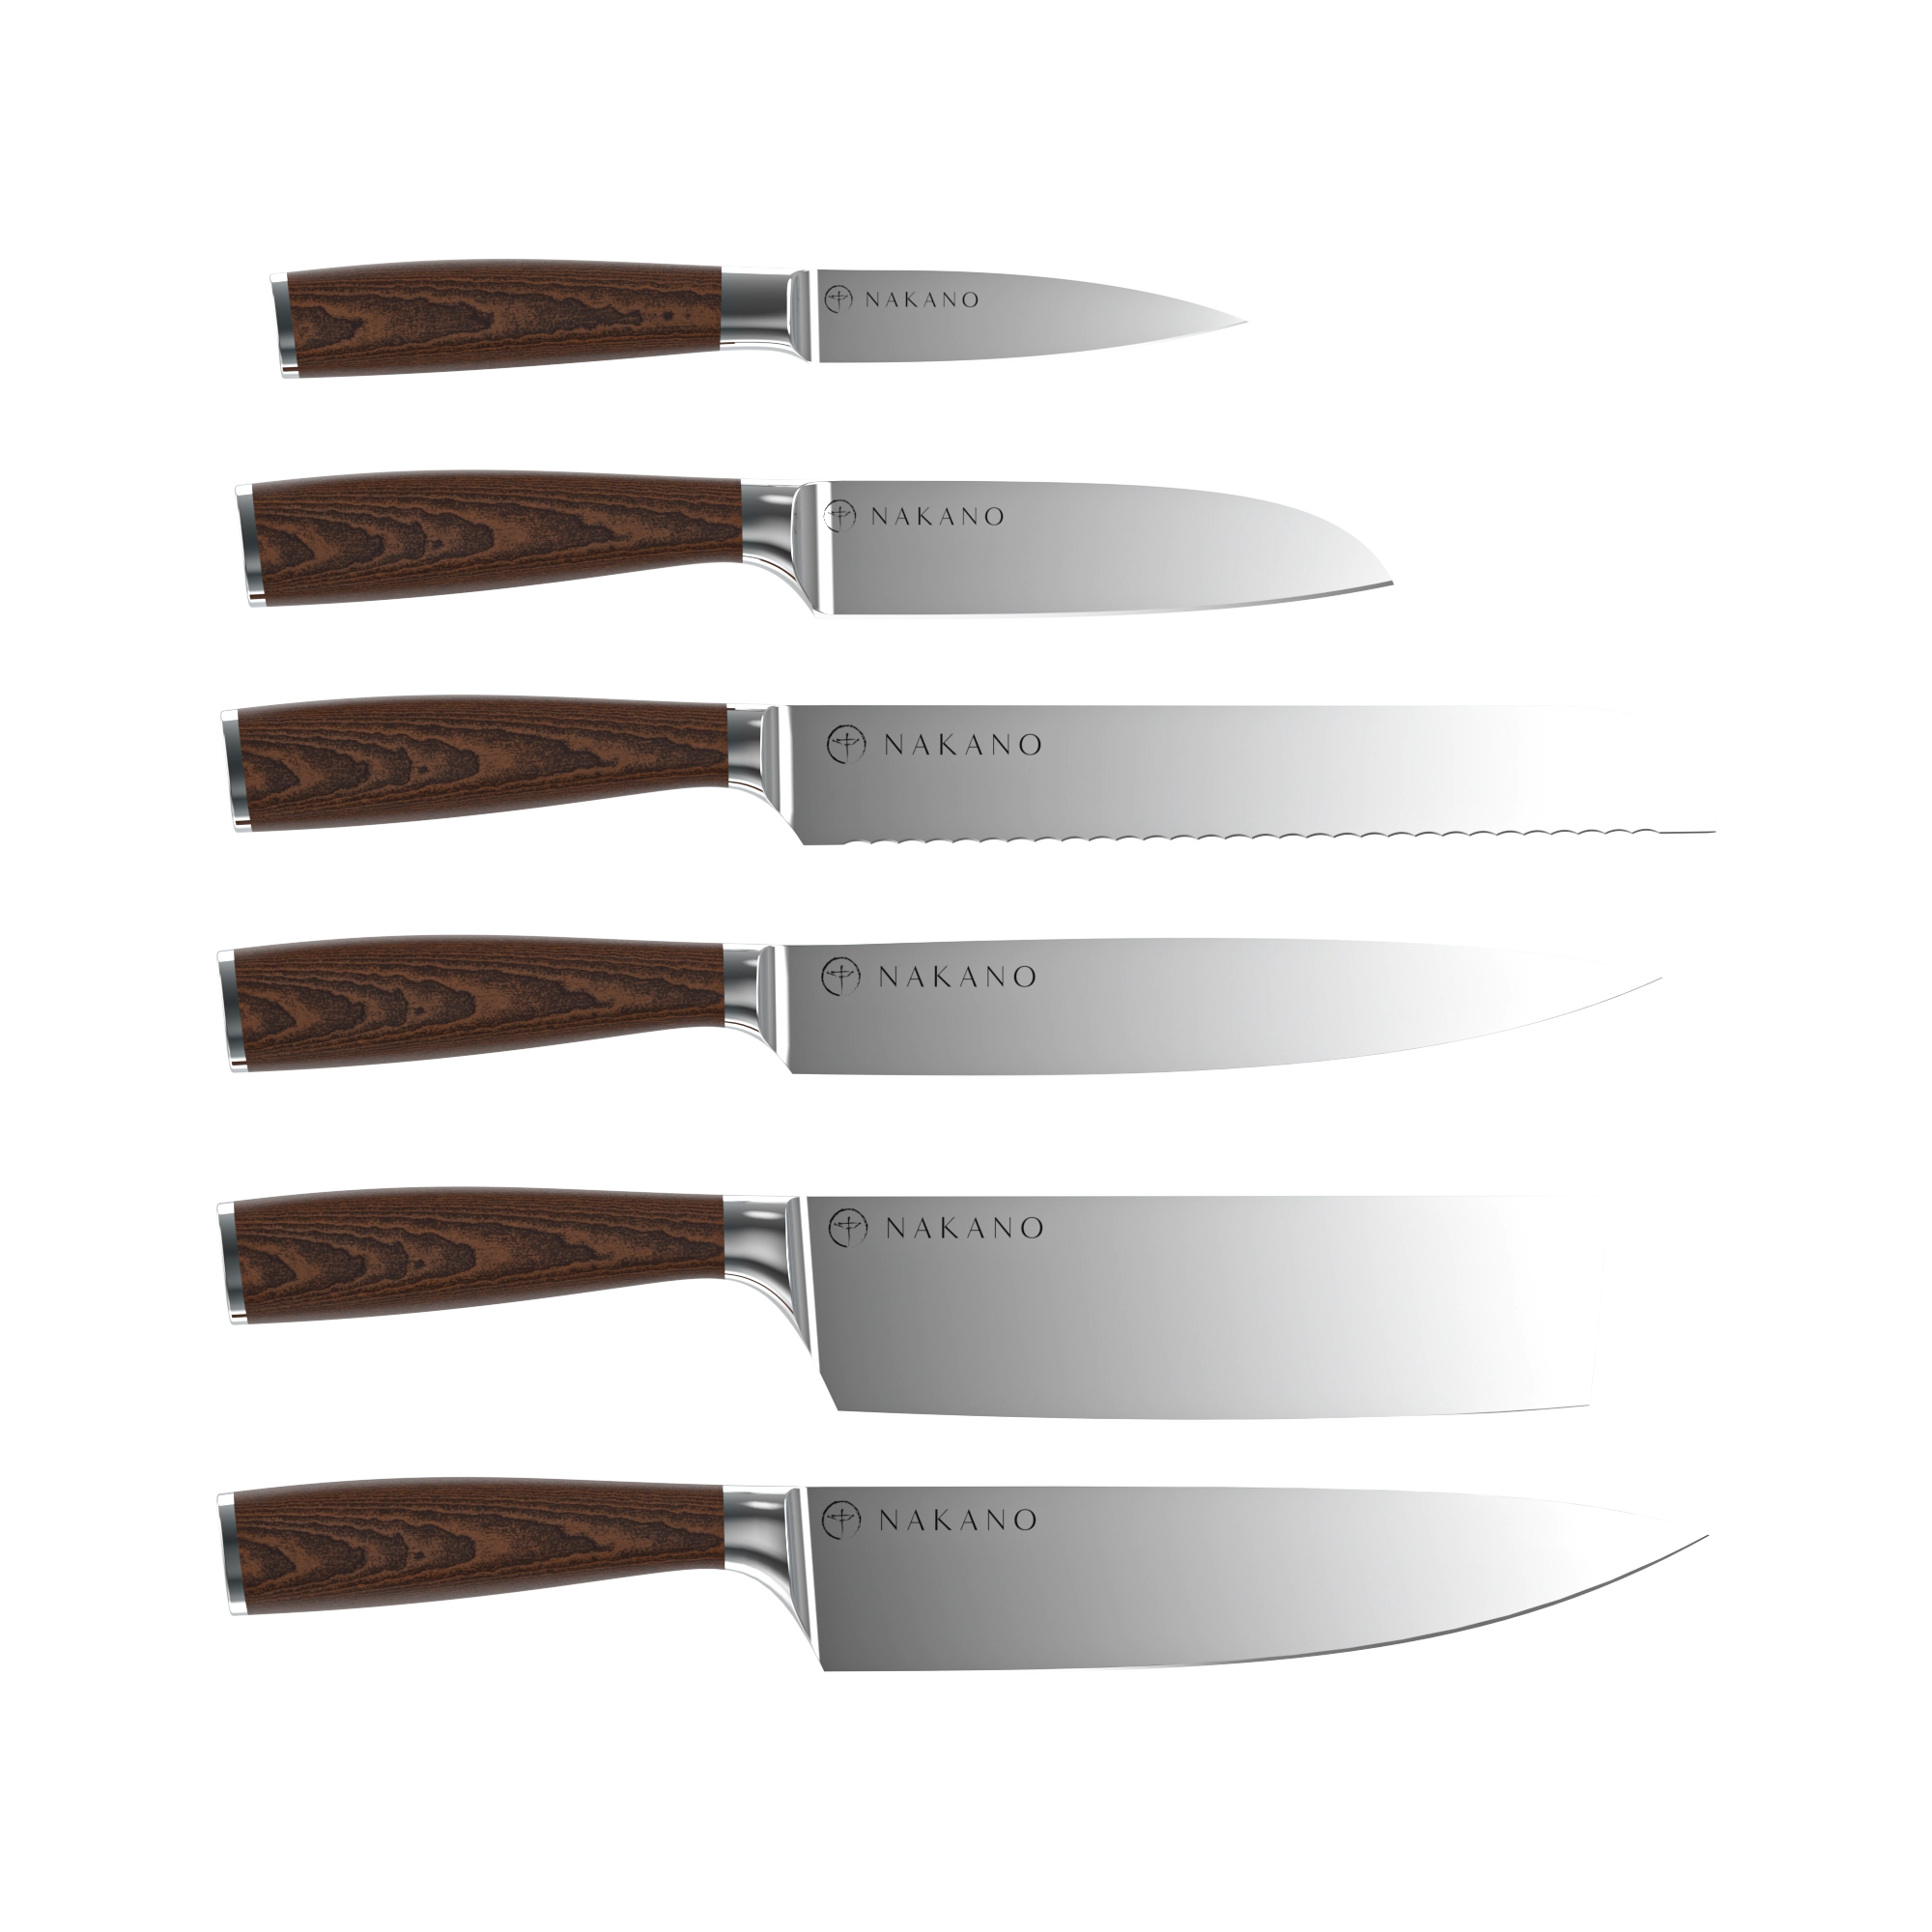 SKID - The First Wooden Chef Knife by LIGNUM — Kickstarter